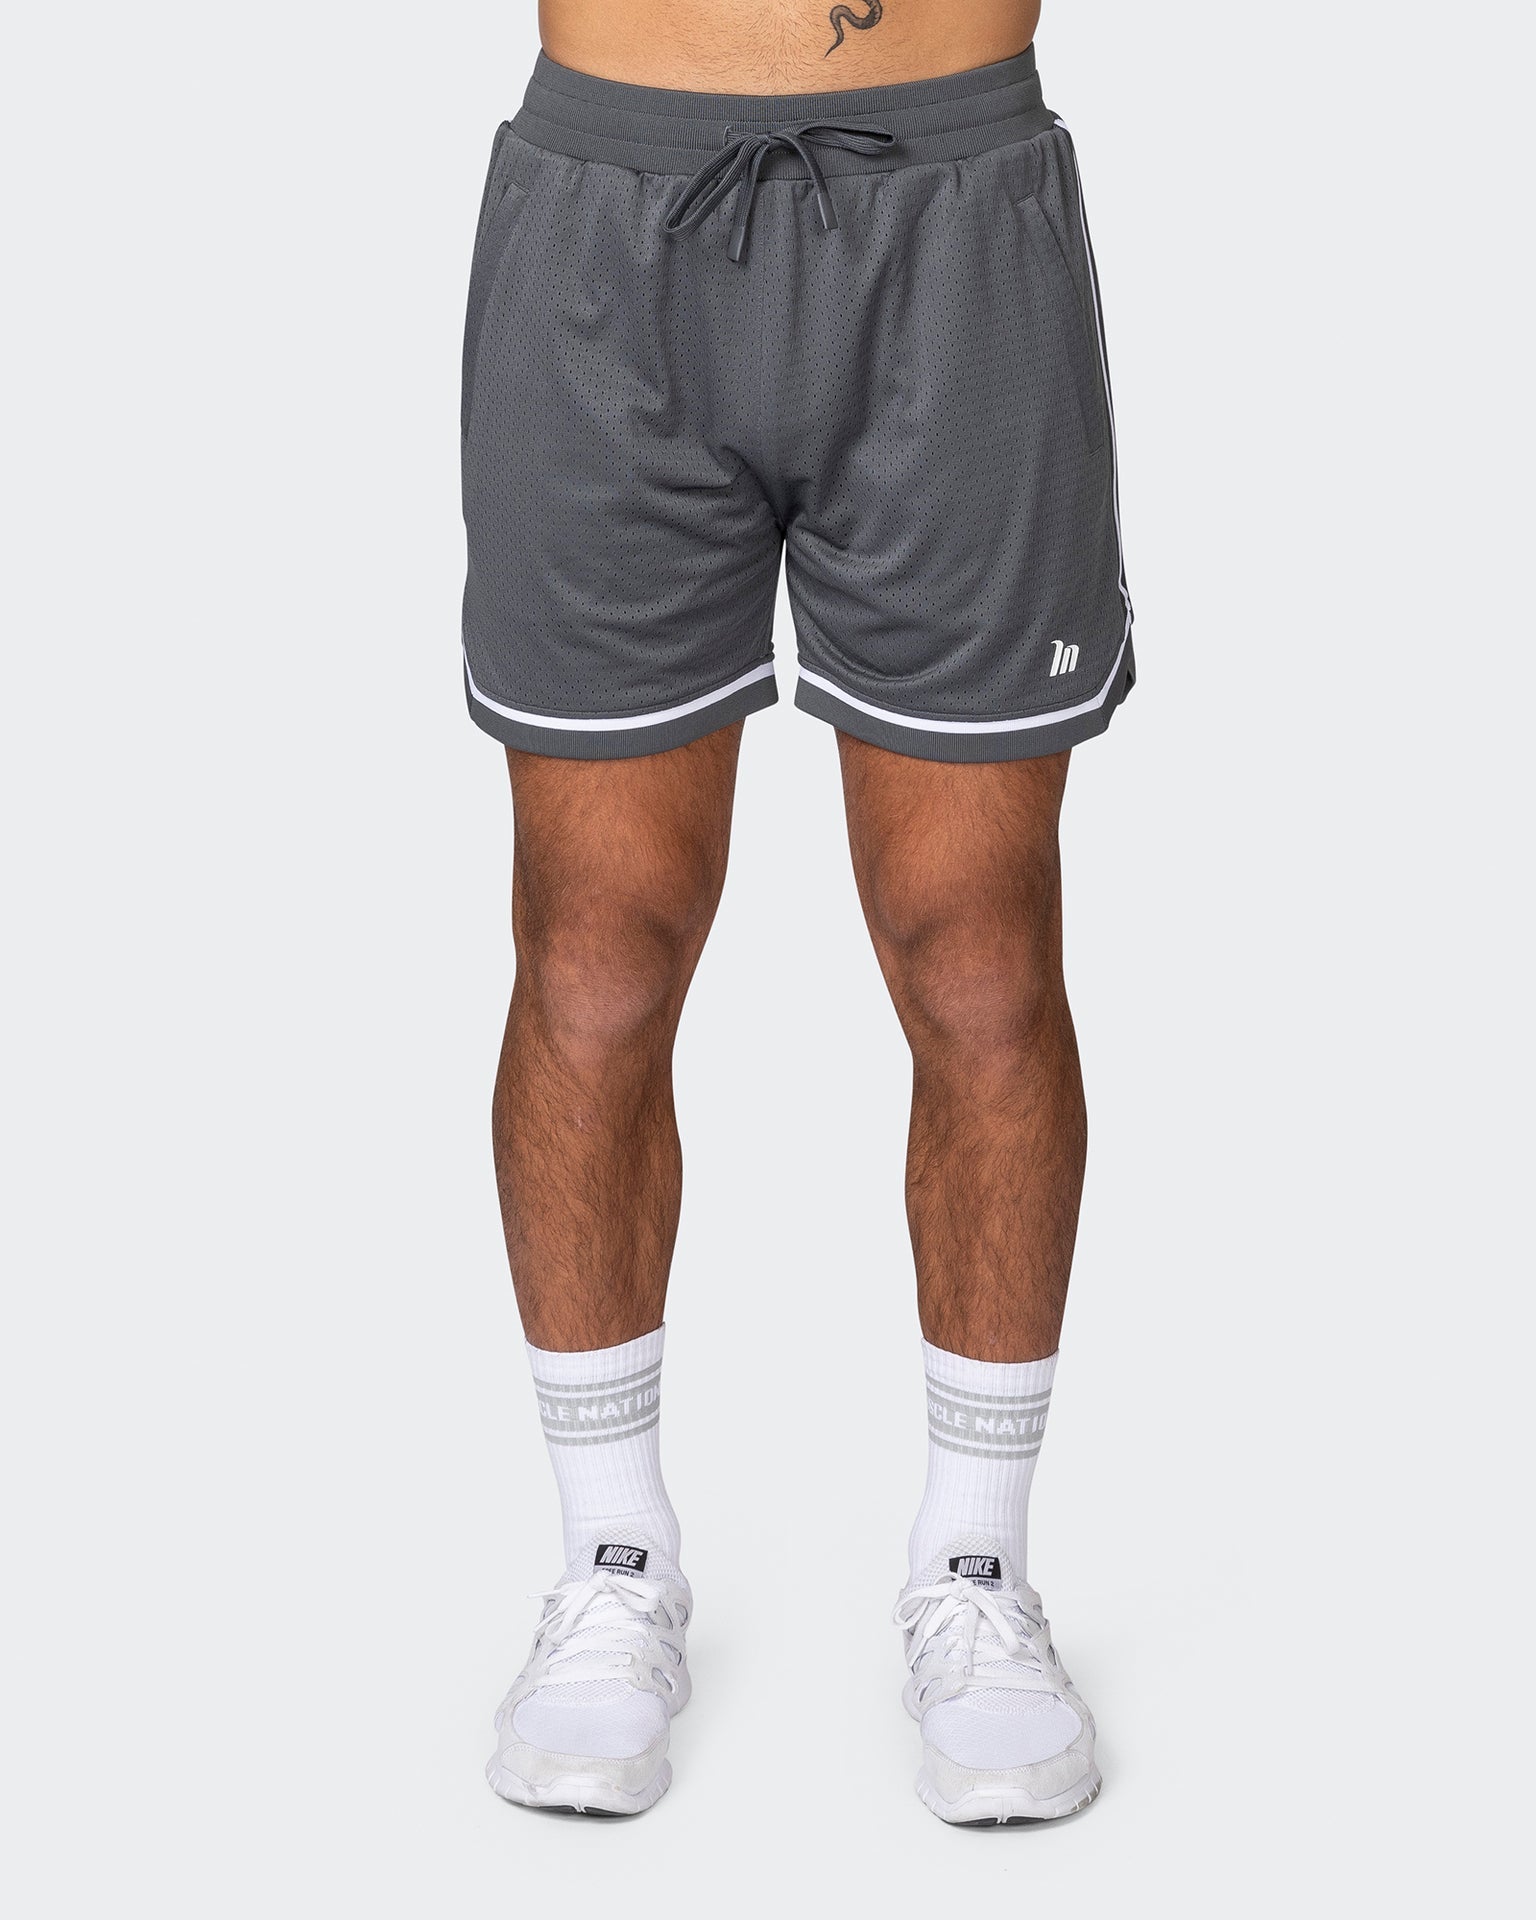 musclenation Gym Shorts Copy of Mens 5" Basketball Shorts - White